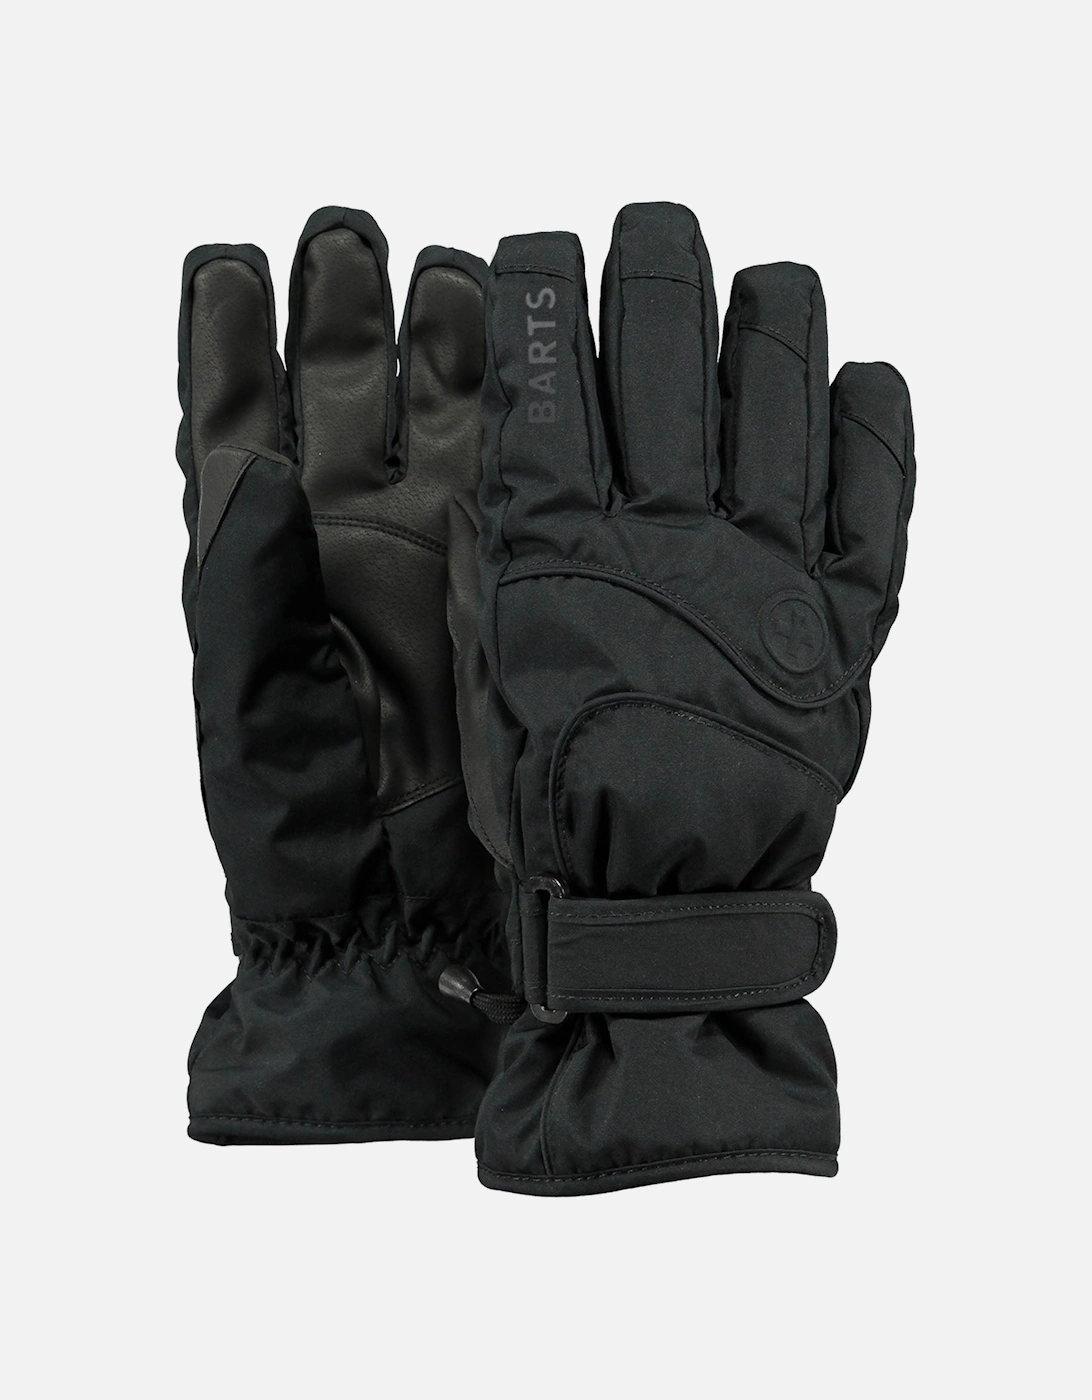 Basic Warm Waterproof Skiing Gloves